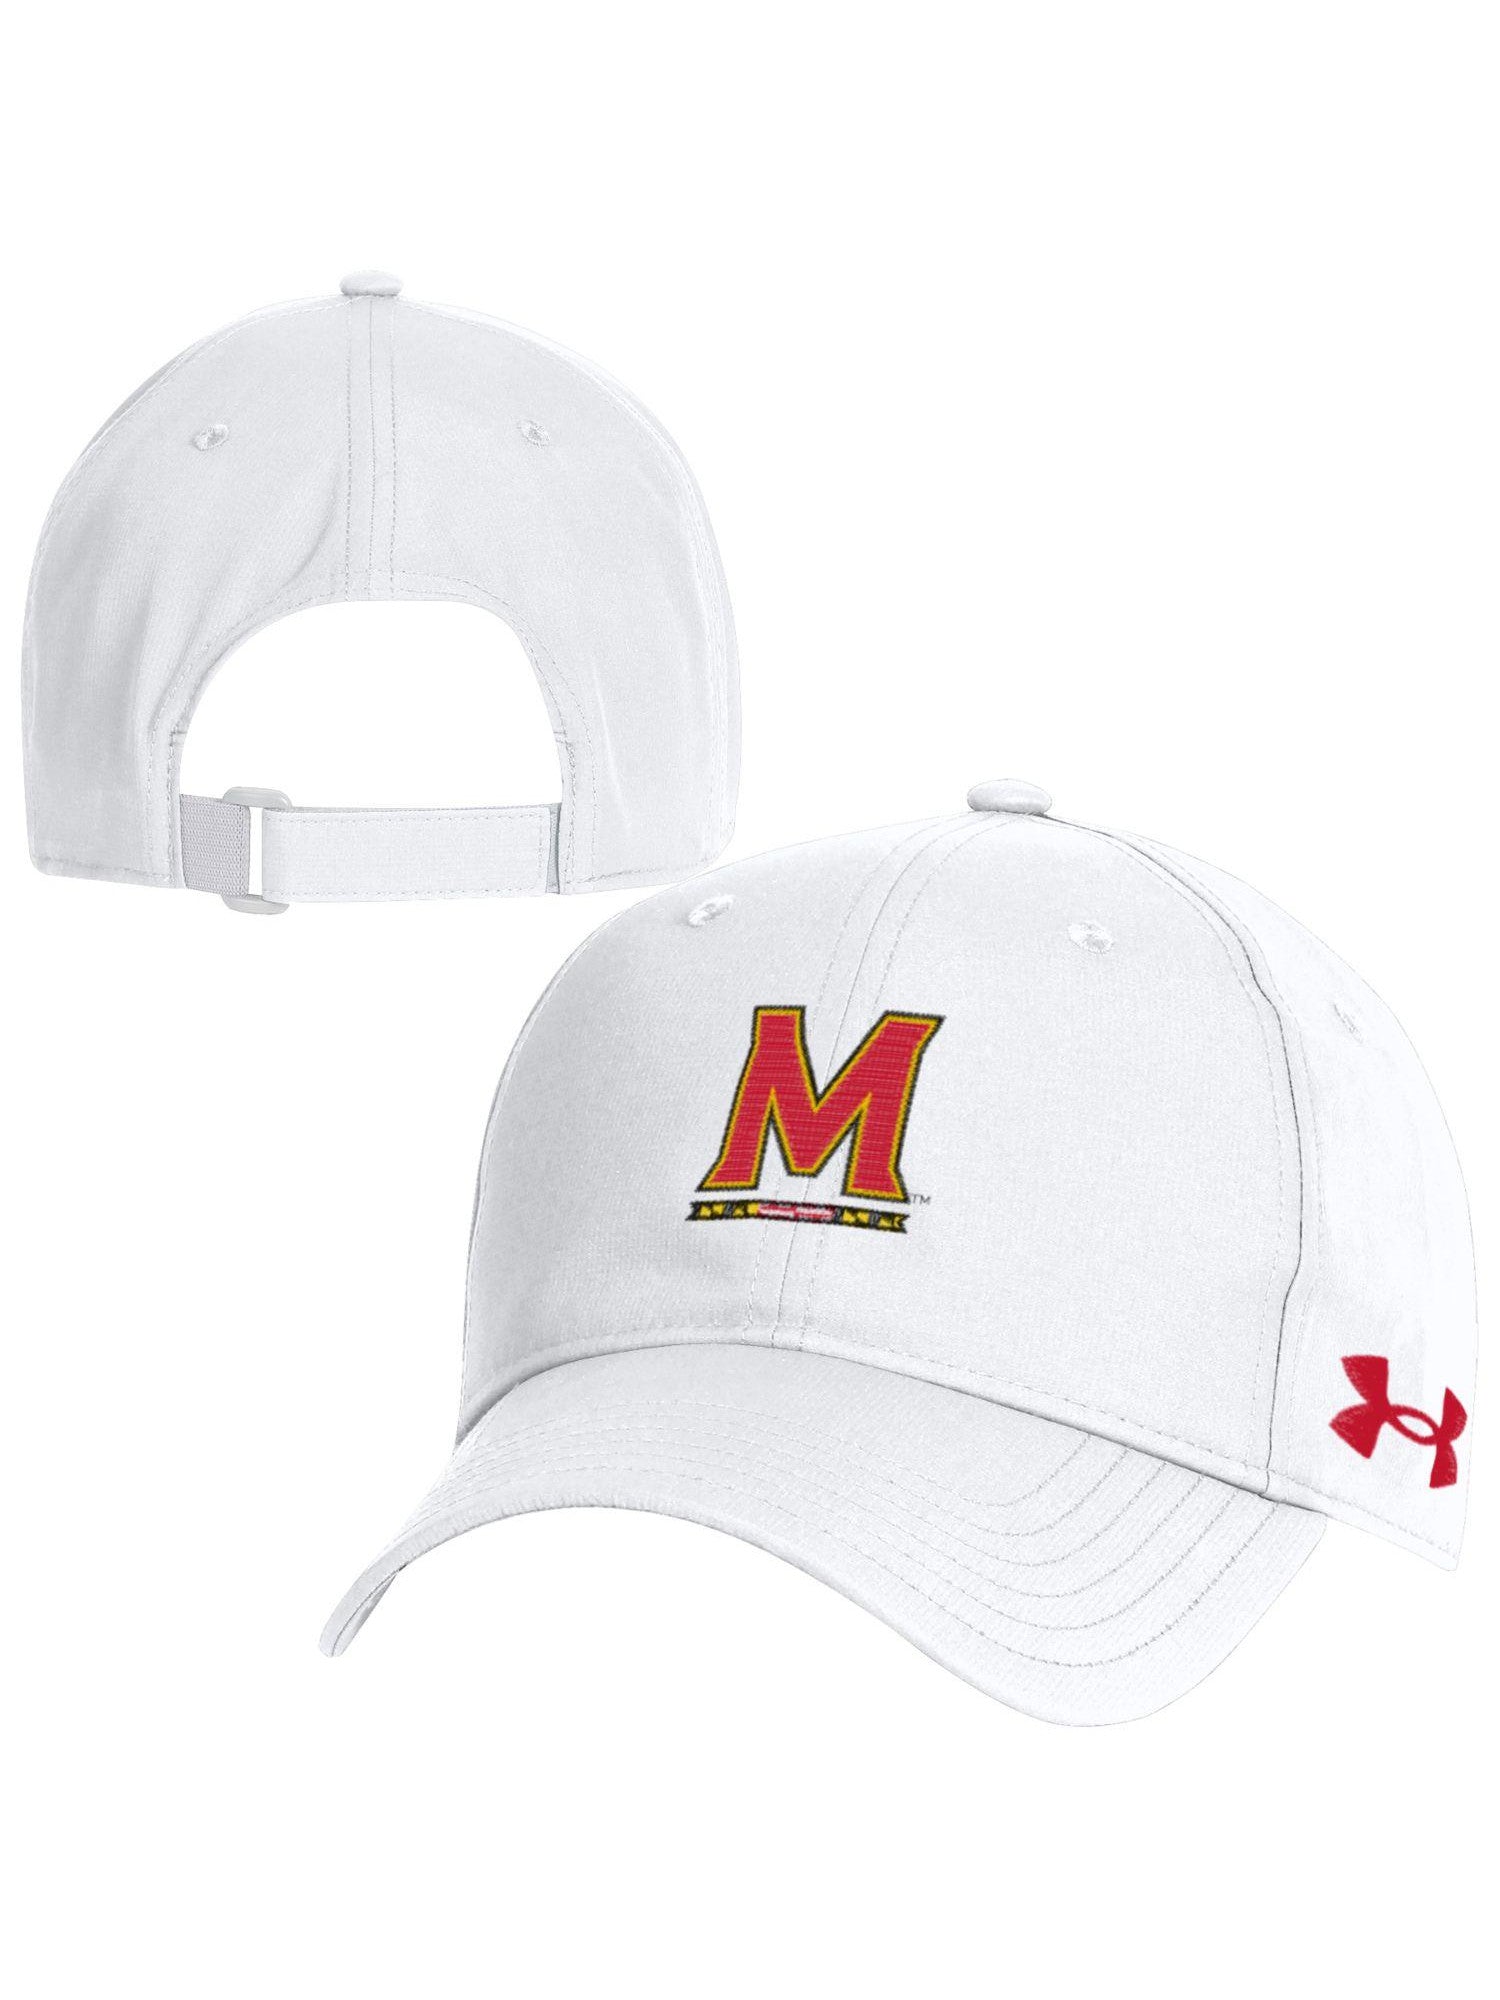 under-armor-university-of-maryland-baseball-cap-white